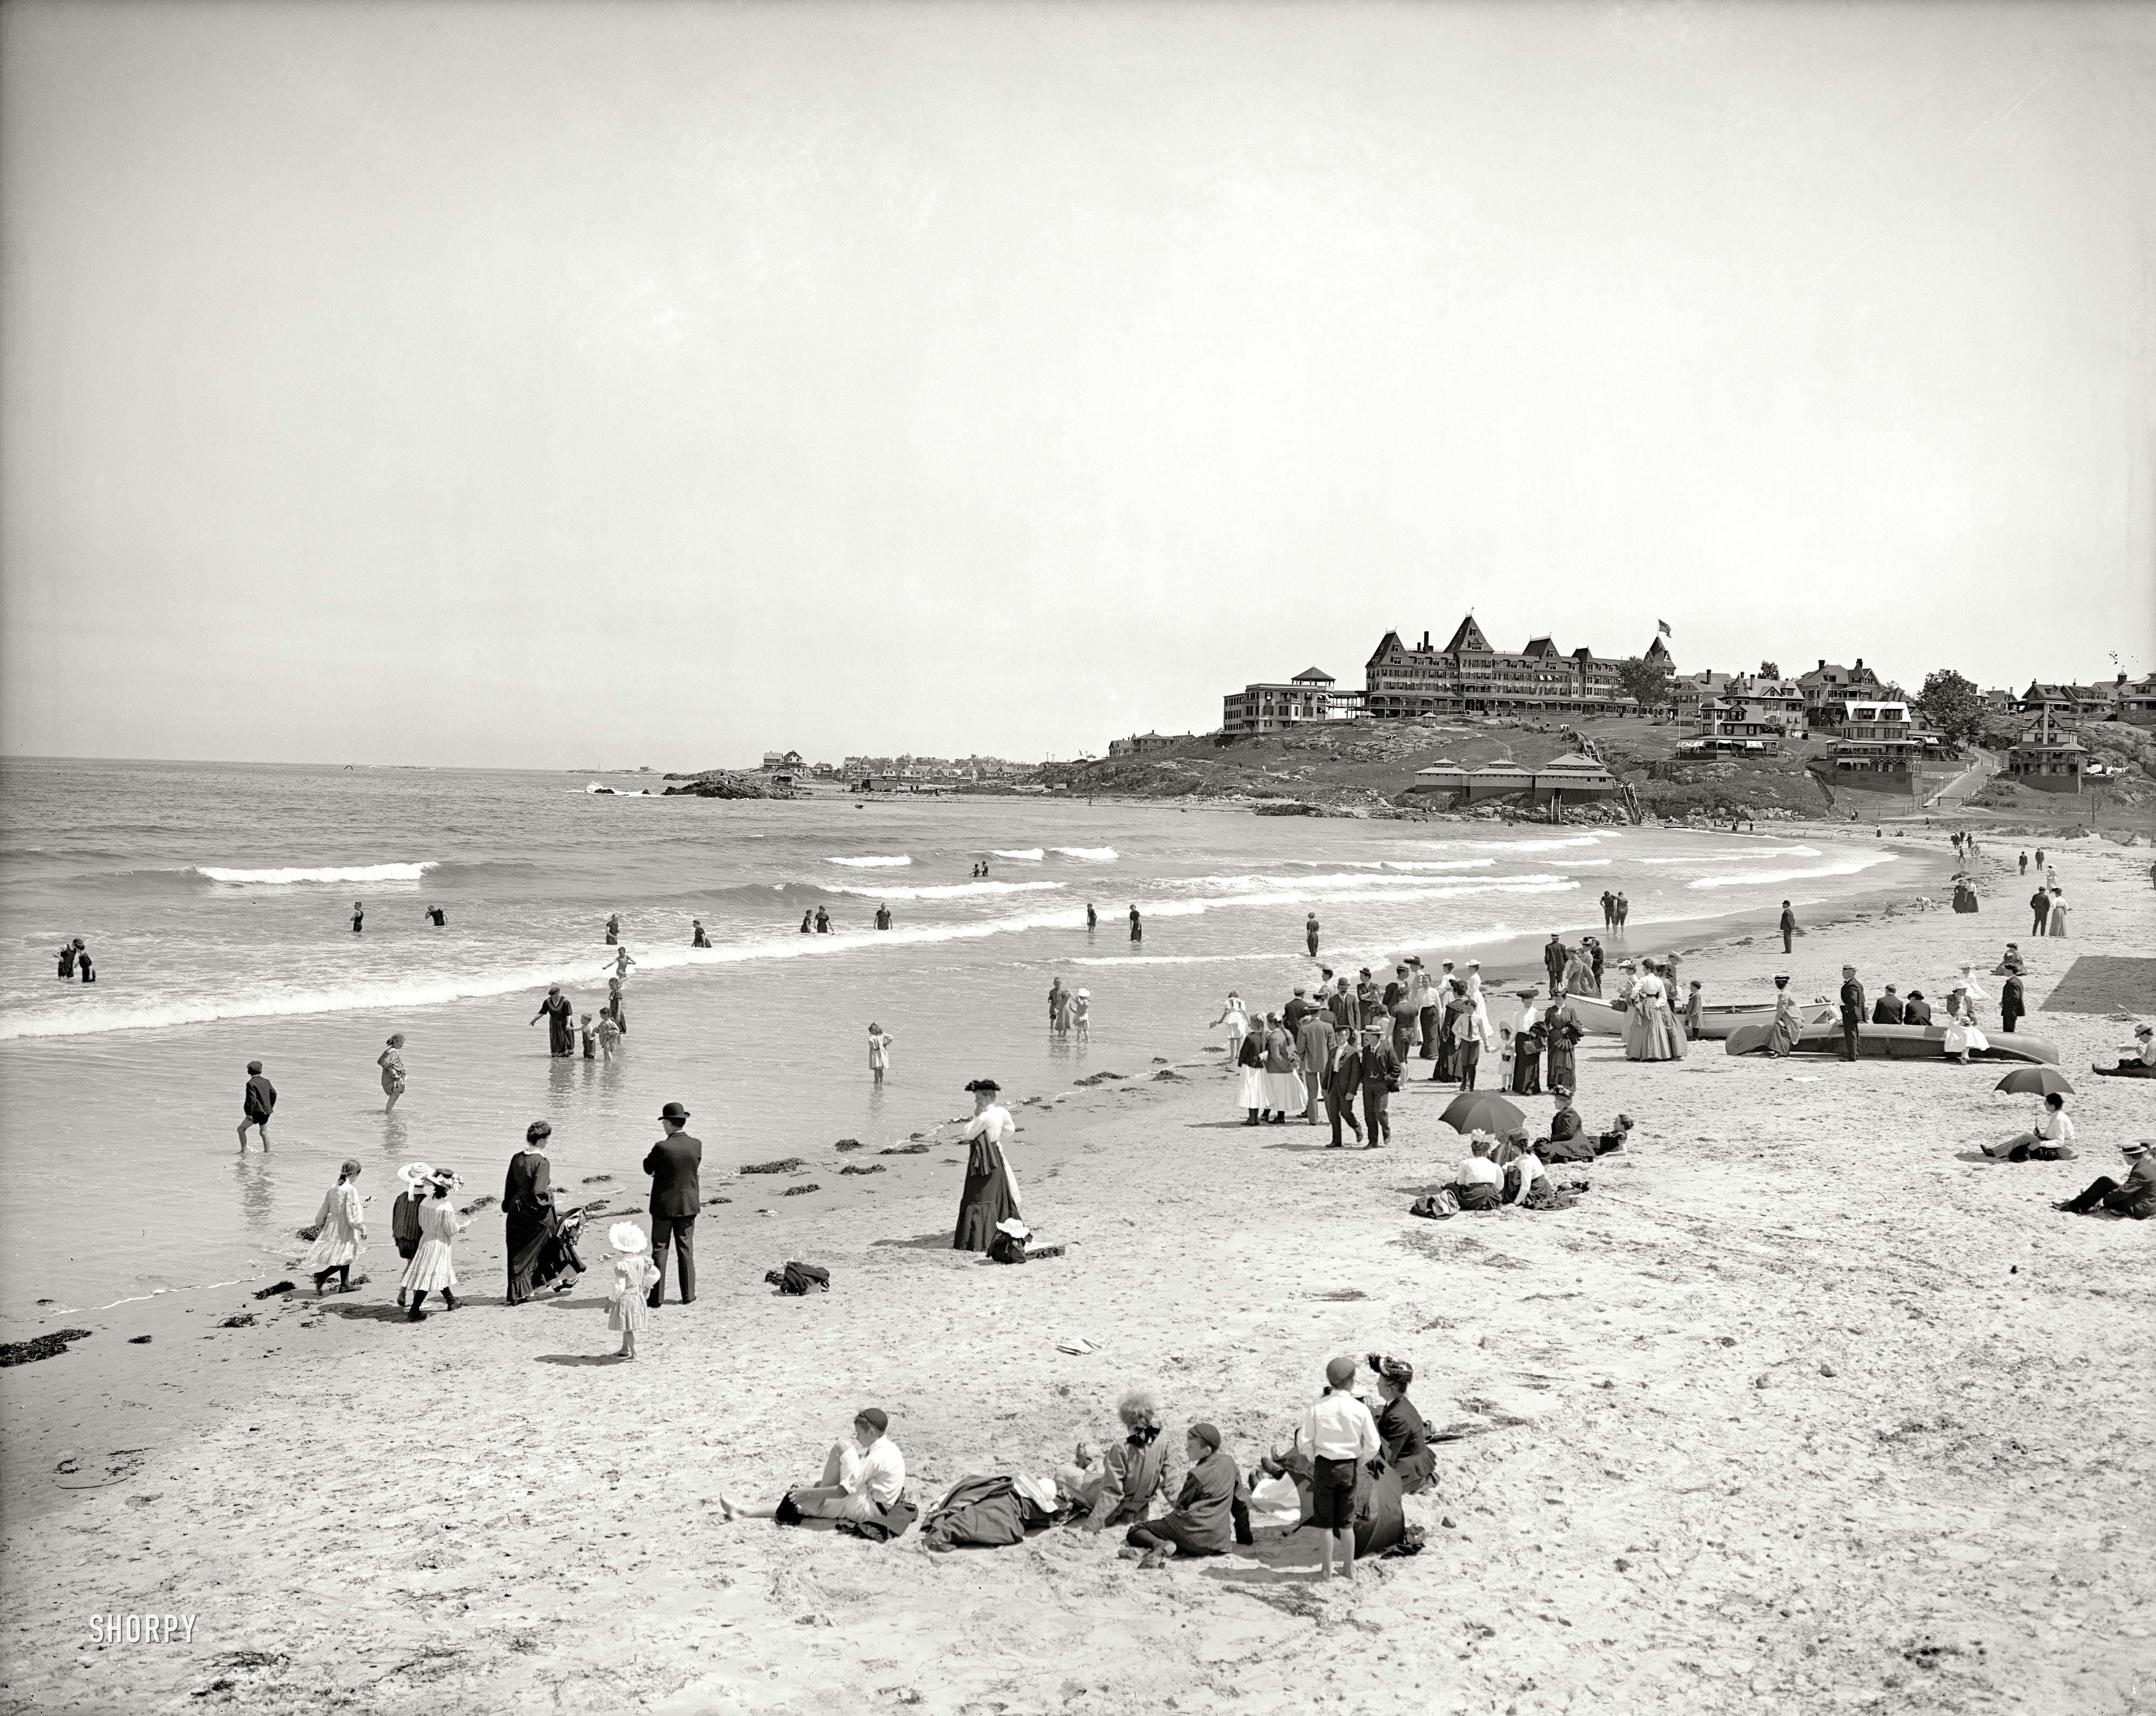 Nantasket Beach, Massachusetts, circa 1905. "Atlantic House and surf bathers." 8x10 inch glass negative, Detroit Publishing Company. View full size.